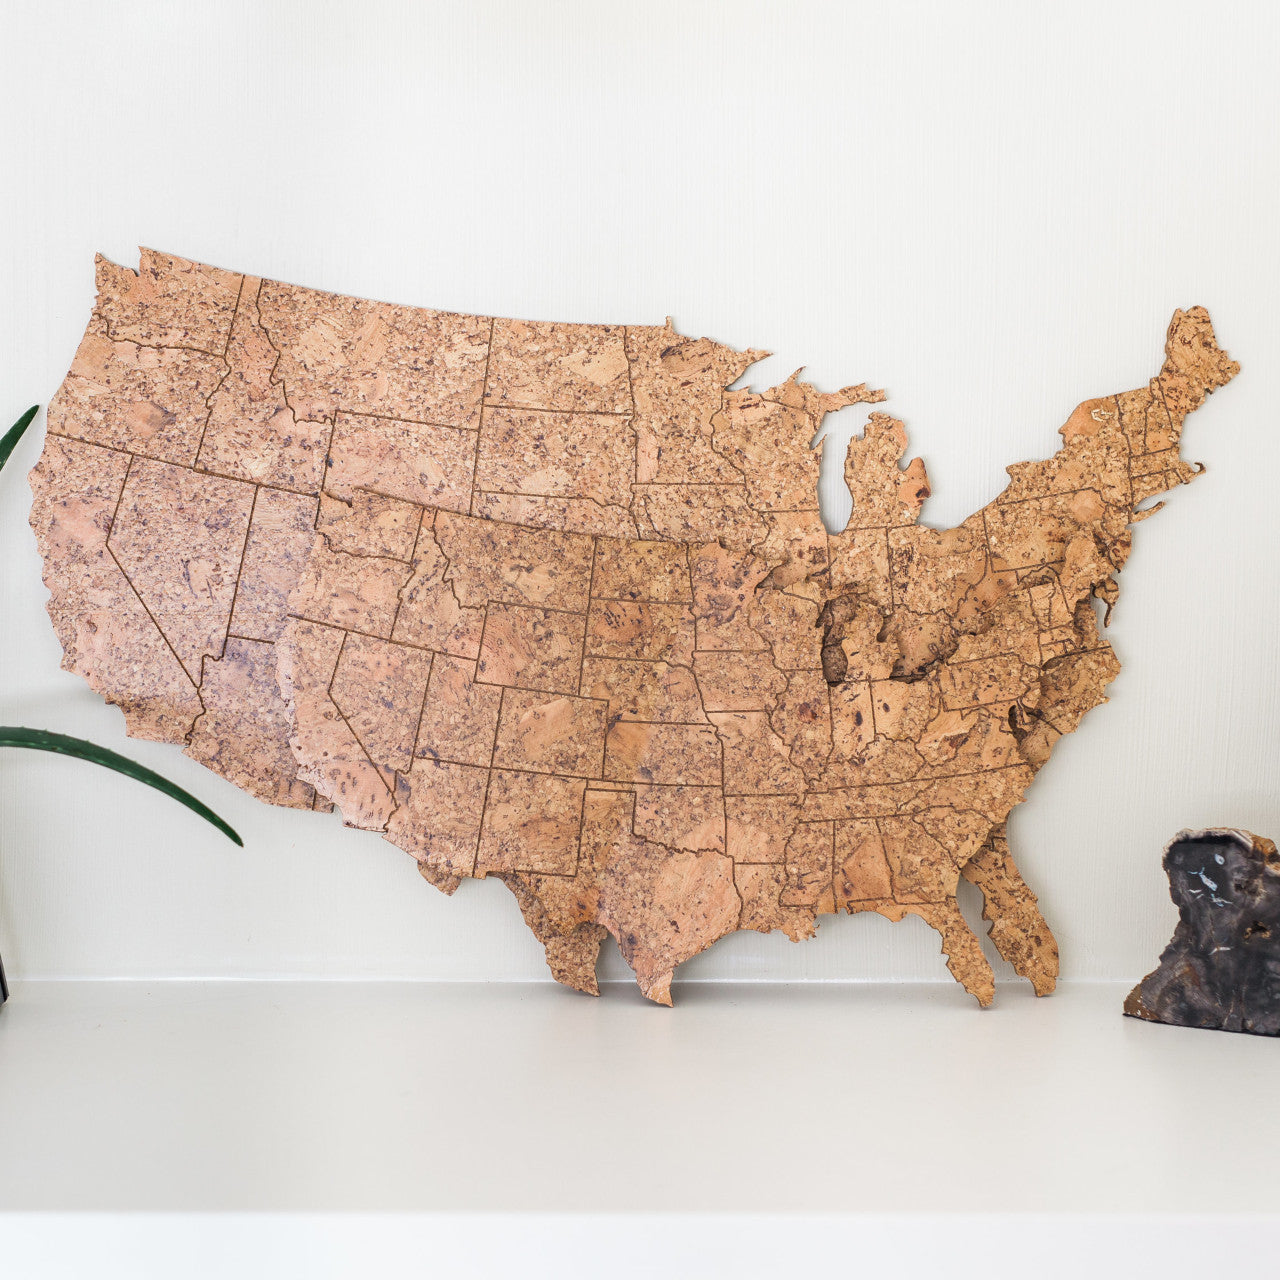 GEO 101 Design - Cork Map of the United States - Medium Size, Wall Decor - GEO 101 DESIGN